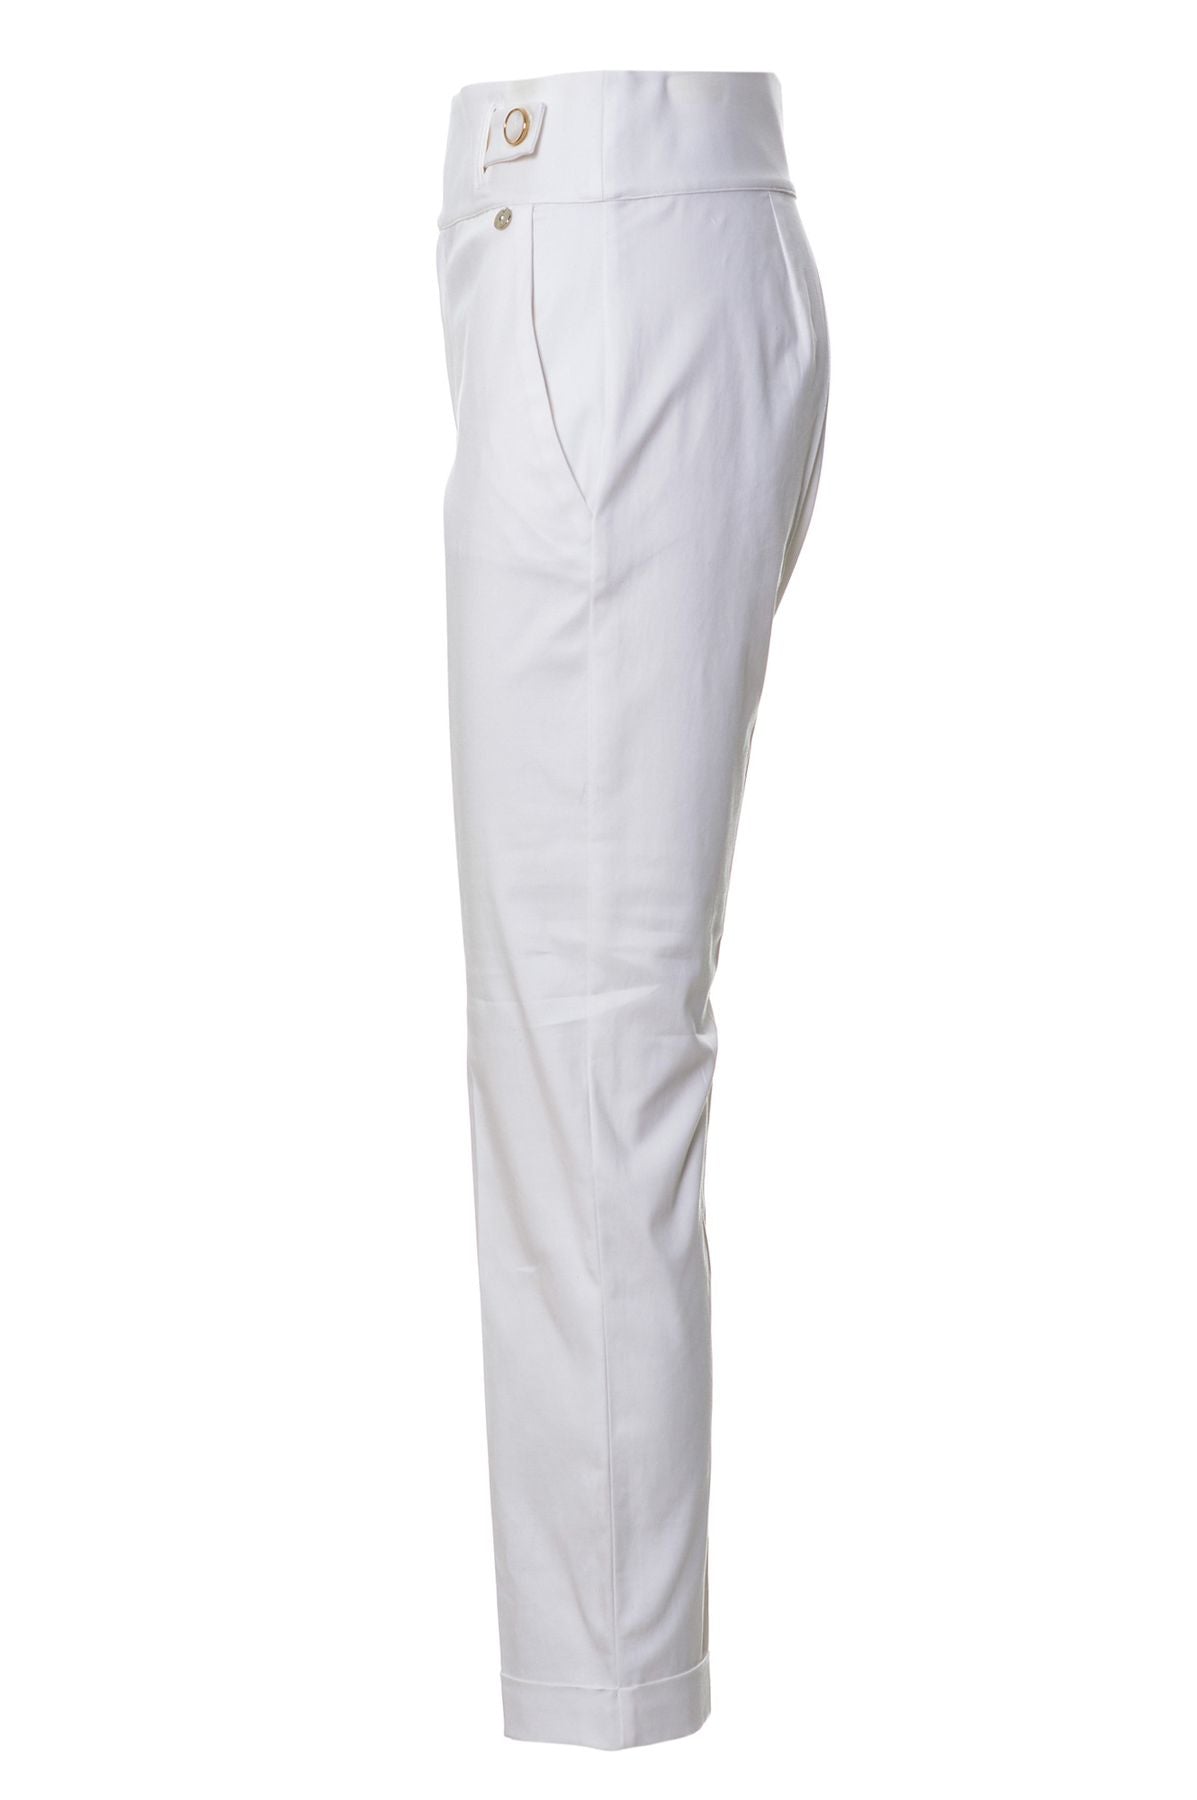 LIU.JO Spring/Summer Cotton Trousers